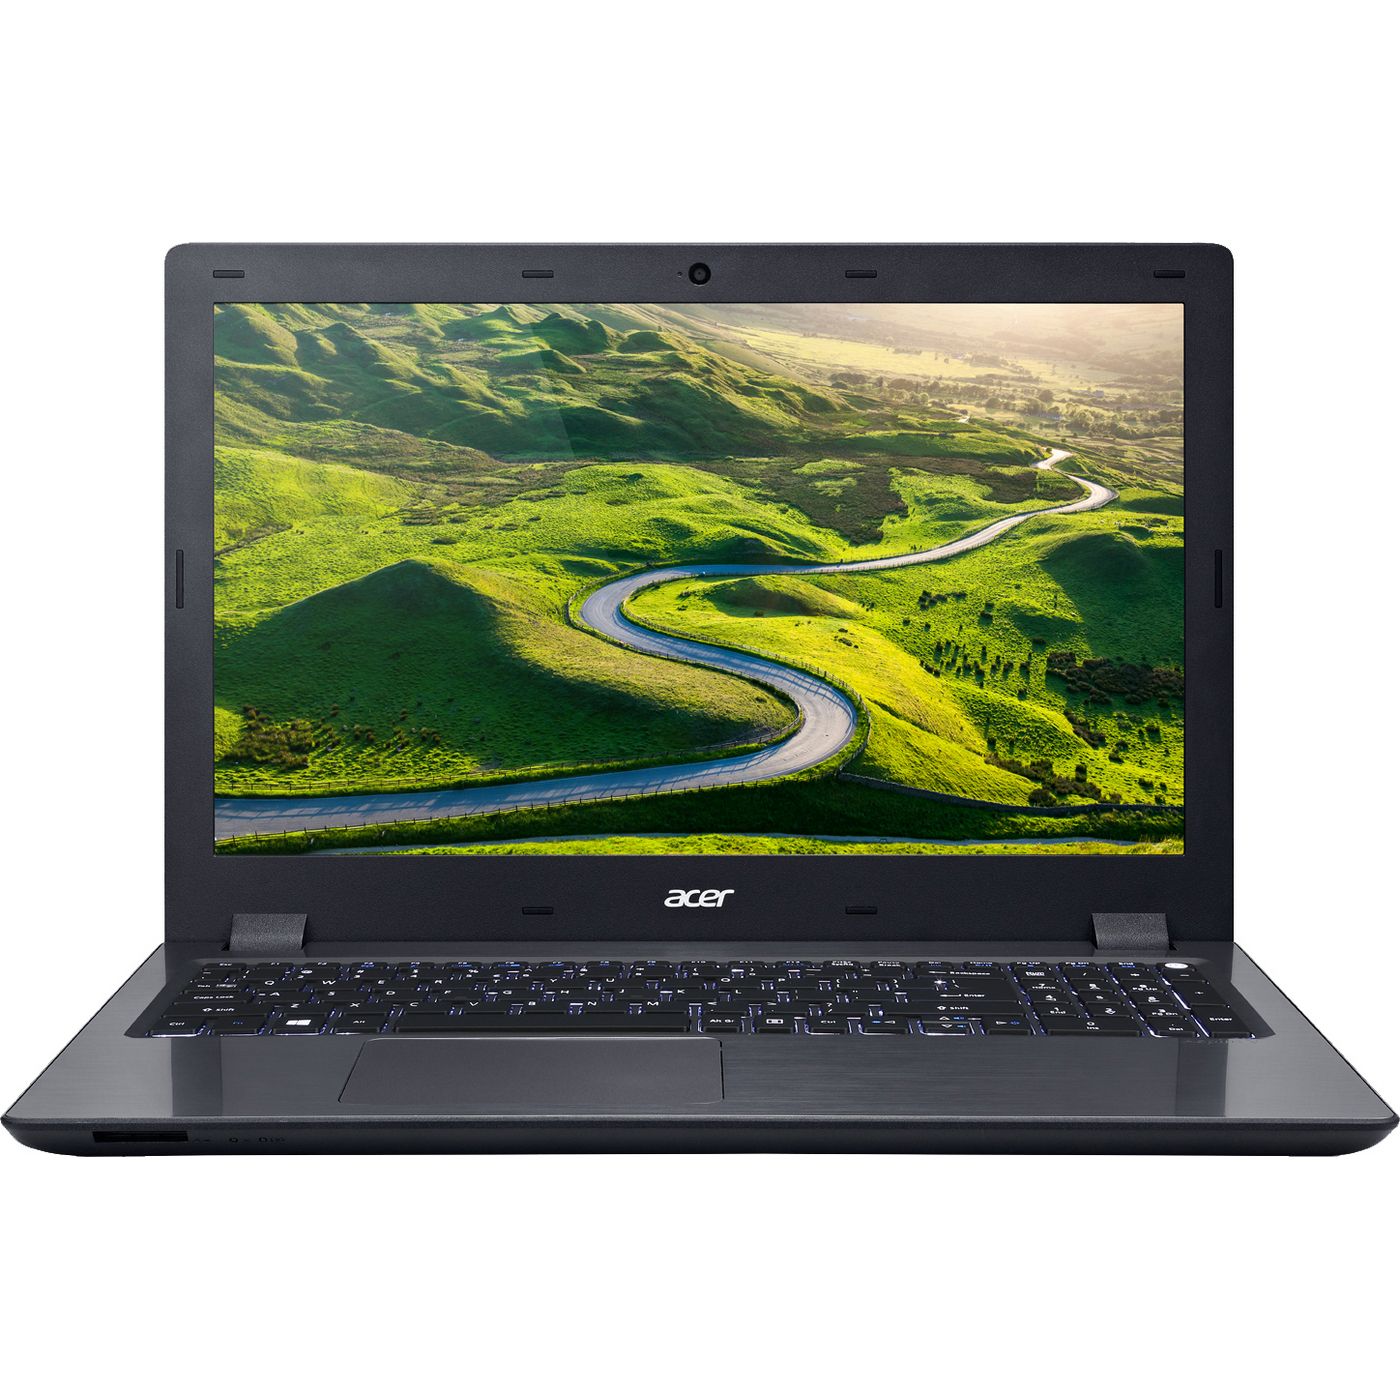  Laptop Acer Aspire V5-591G, Intel Core i7-6700HQ, 8GB DDR4, SSHD 1TB + 128GB, nVidia GeForce GTX 950M 4GB, Free DOS 